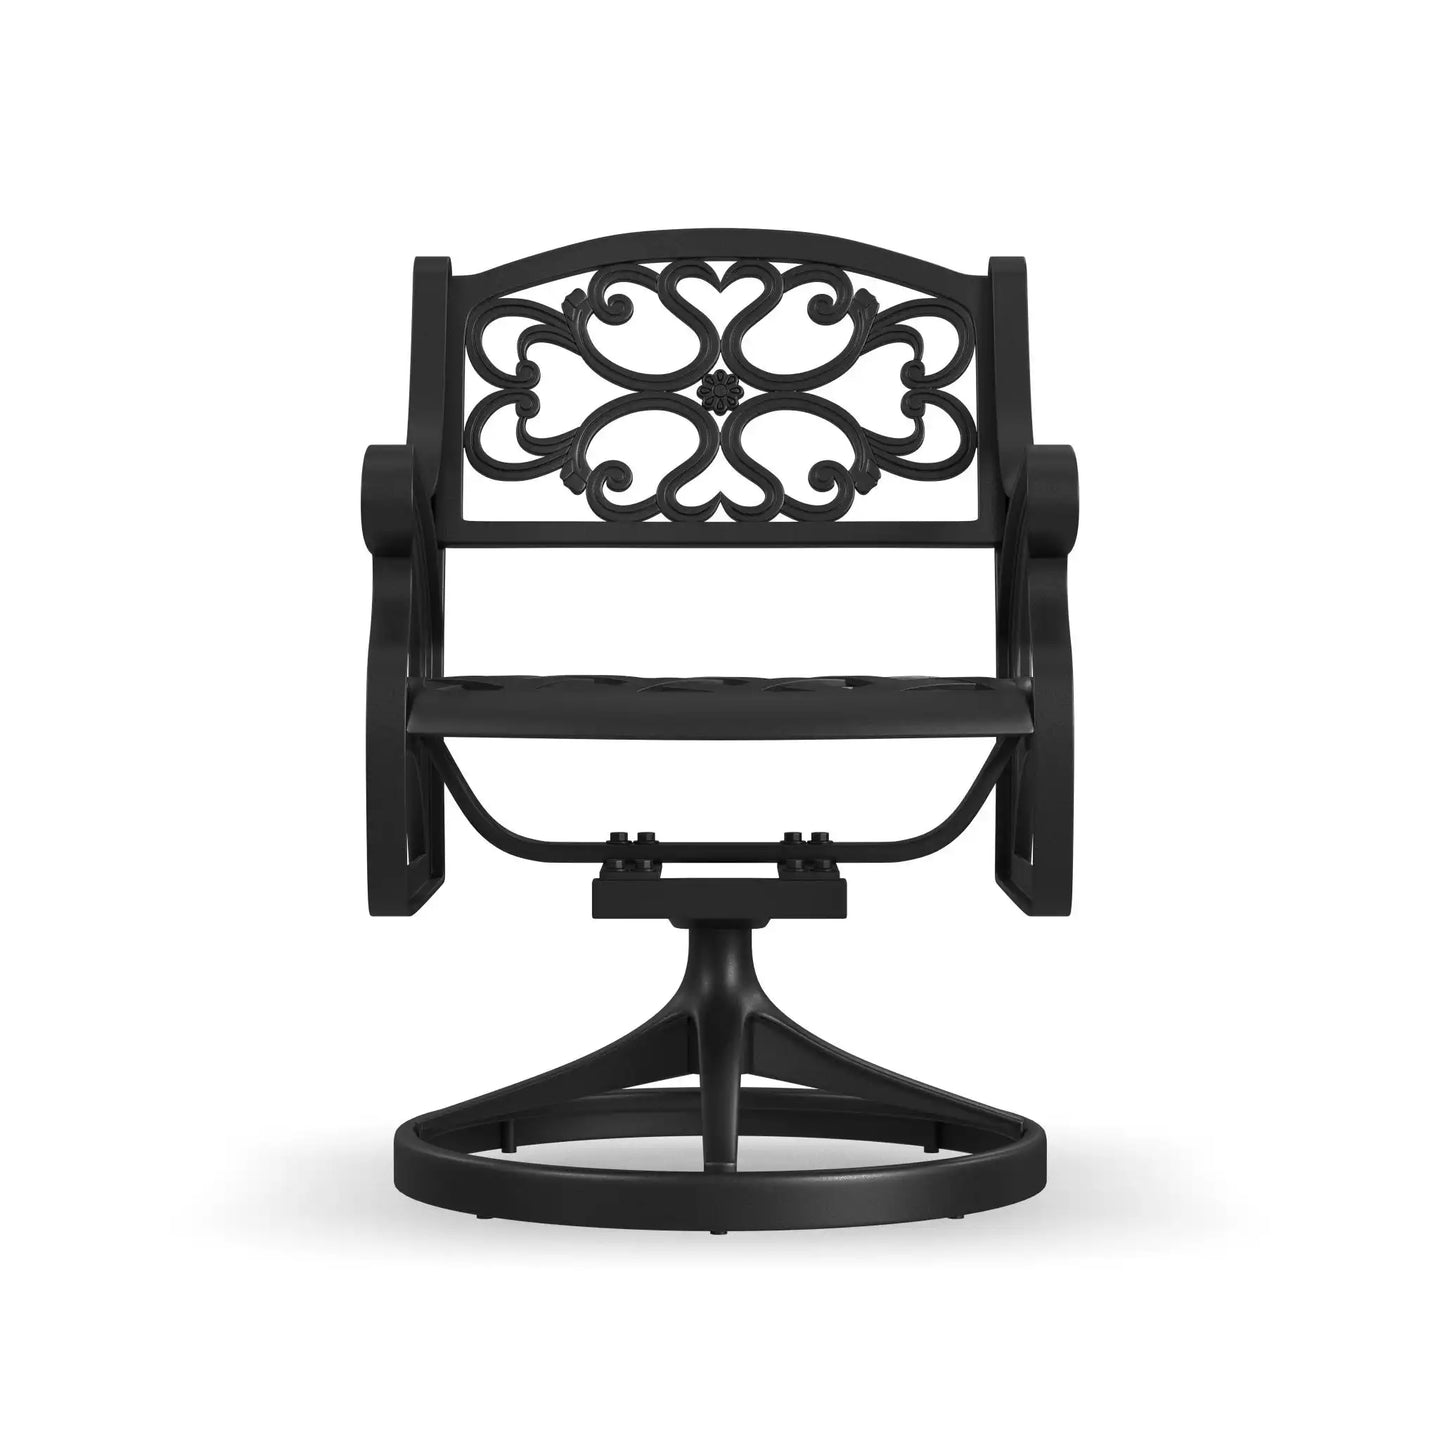 Homestyles Sanibel Black Outdoor Swivel Rocking Chair